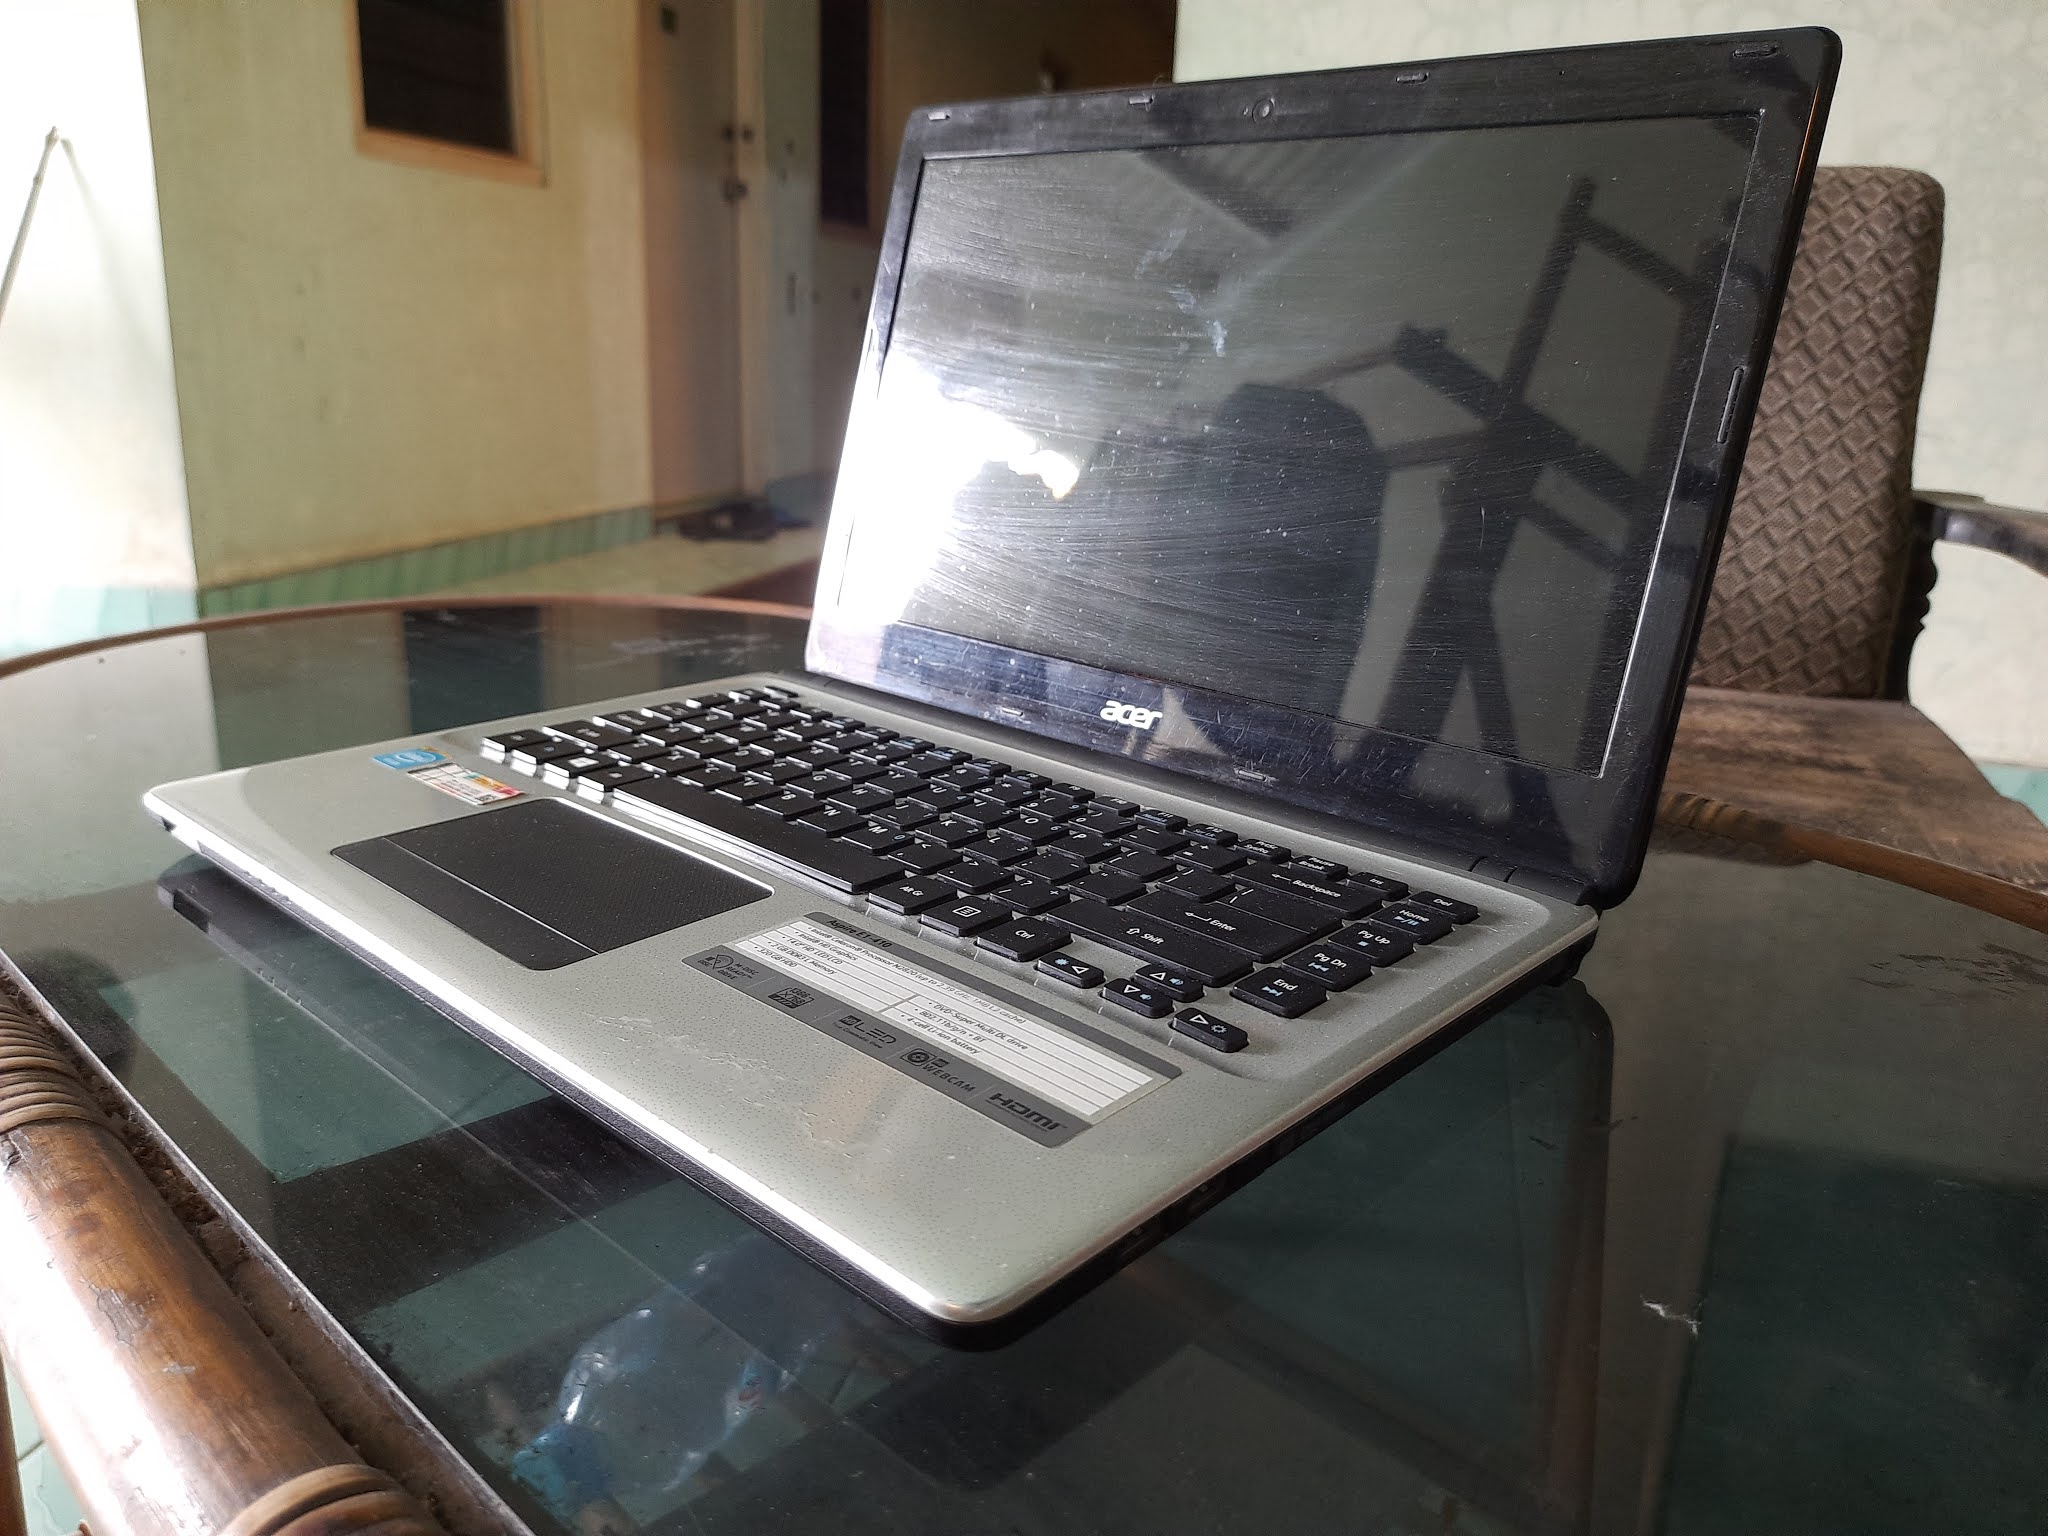 Beli Komputer Bekas Surabaya: Membeli Laptop TV Komputer dan AC Segala